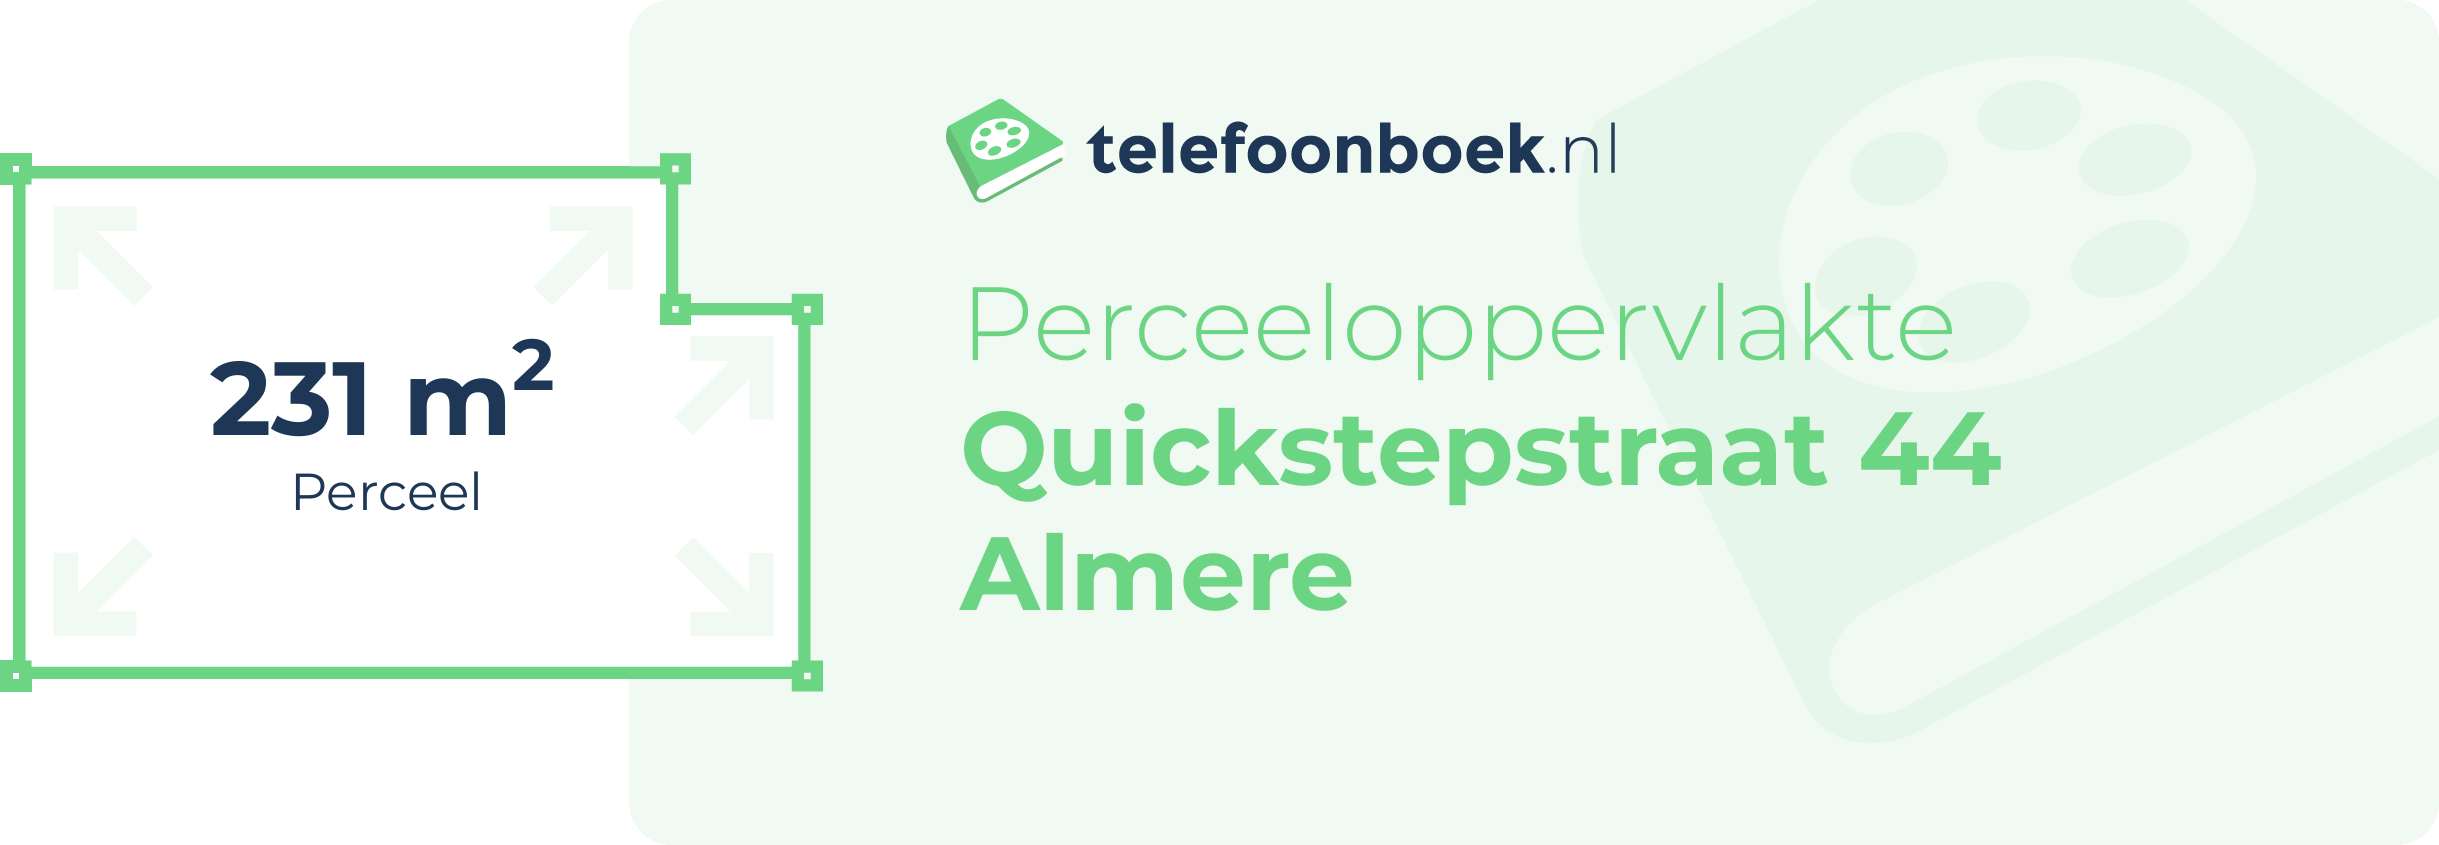 Perceeloppervlakte Quickstepstraat 44 Almere